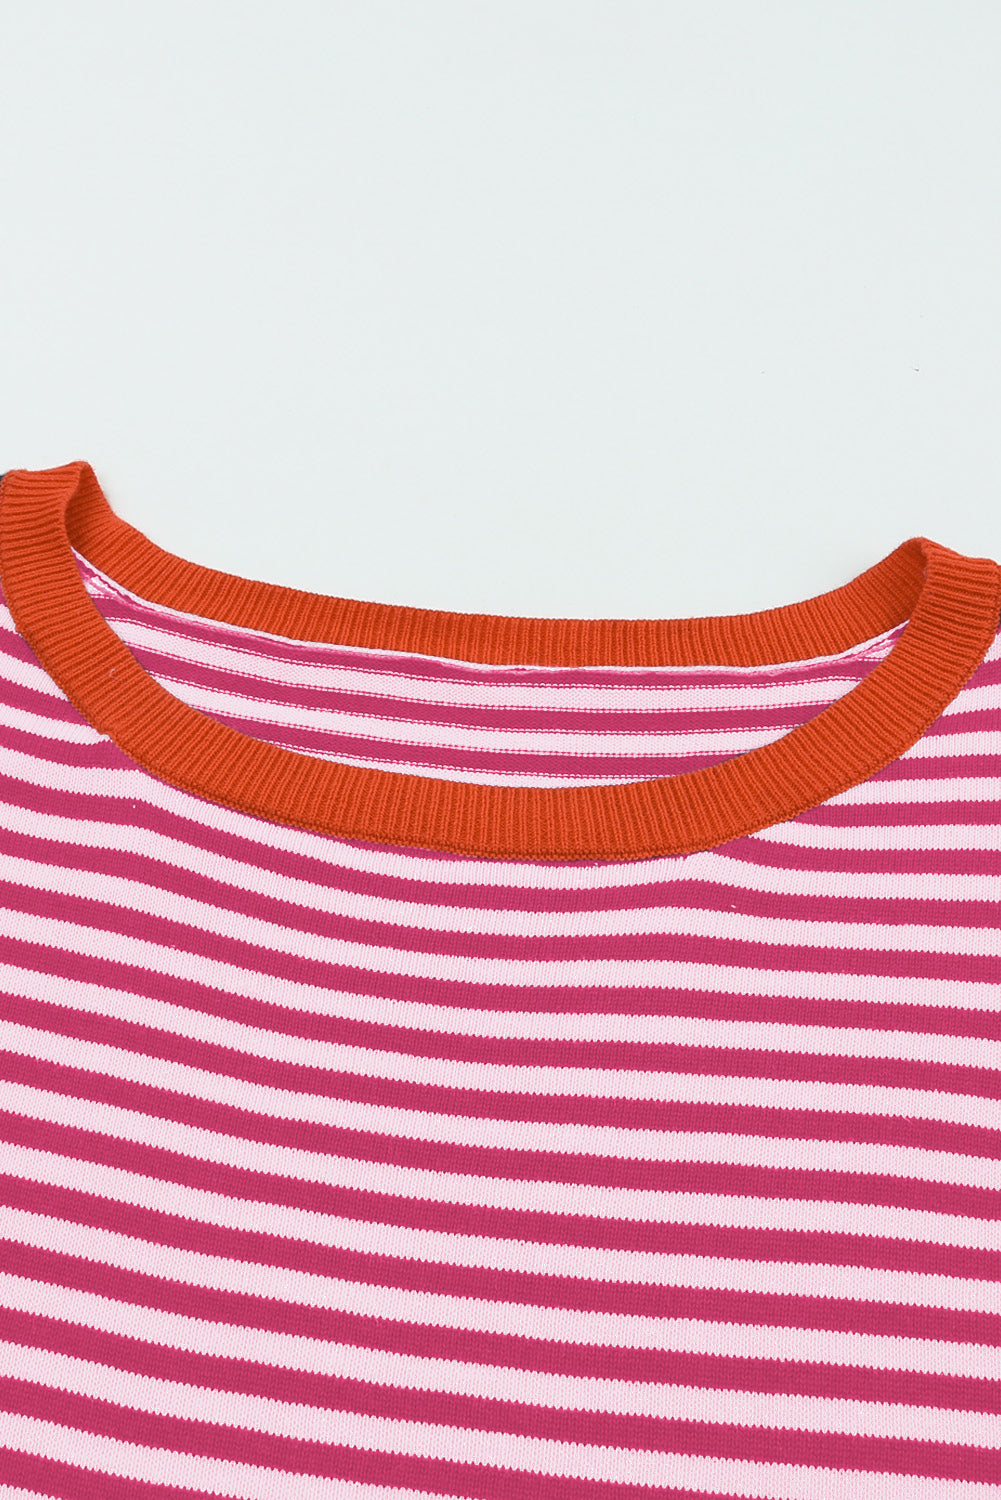 Ružičasti kontrastni prugasti pulover na spuštena ramena